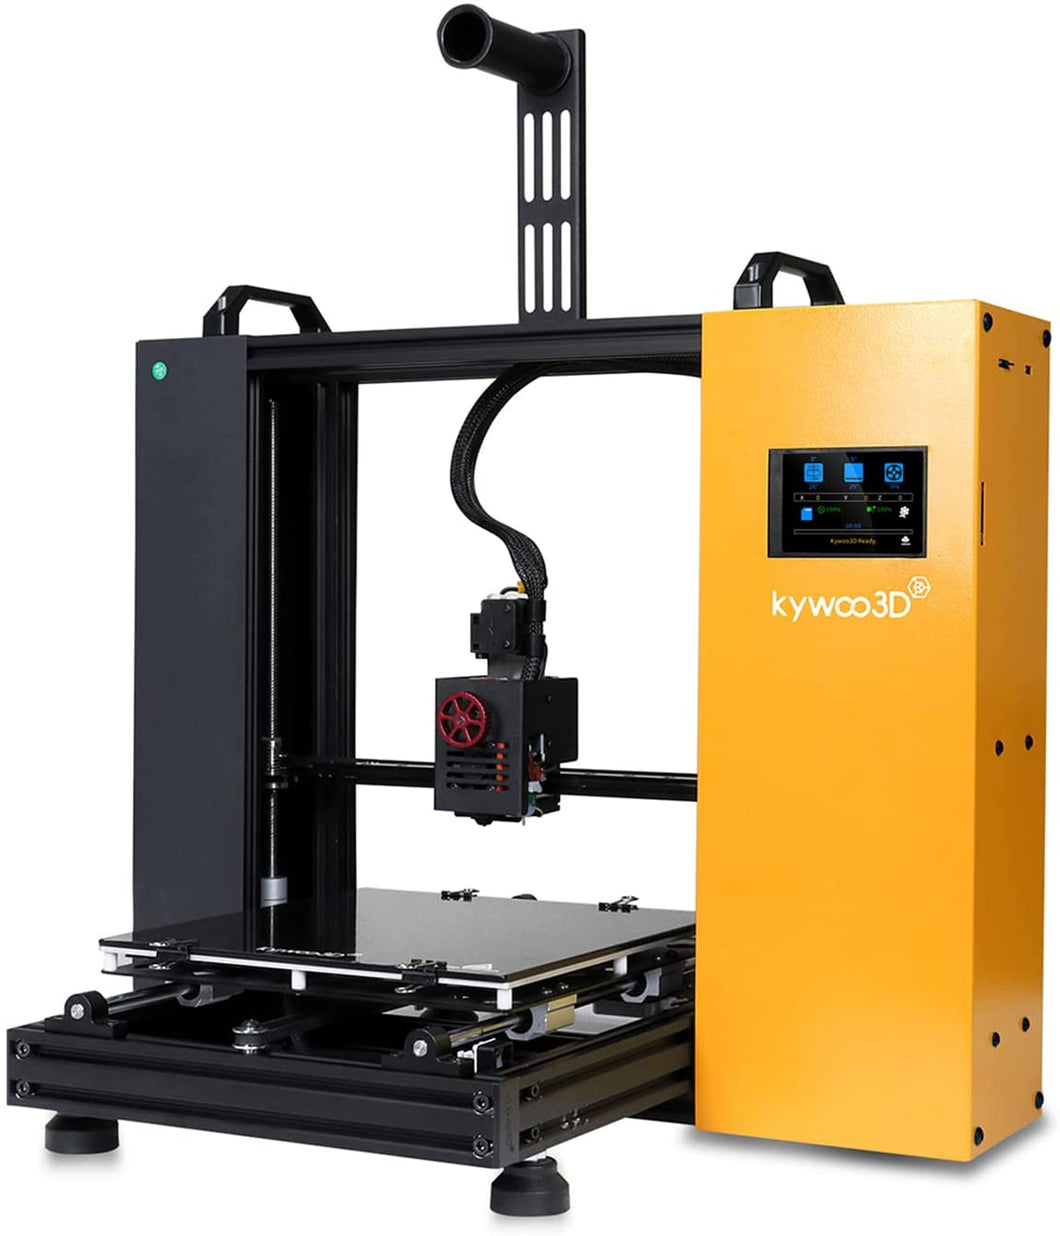 Tycoon MAX 3D Printer